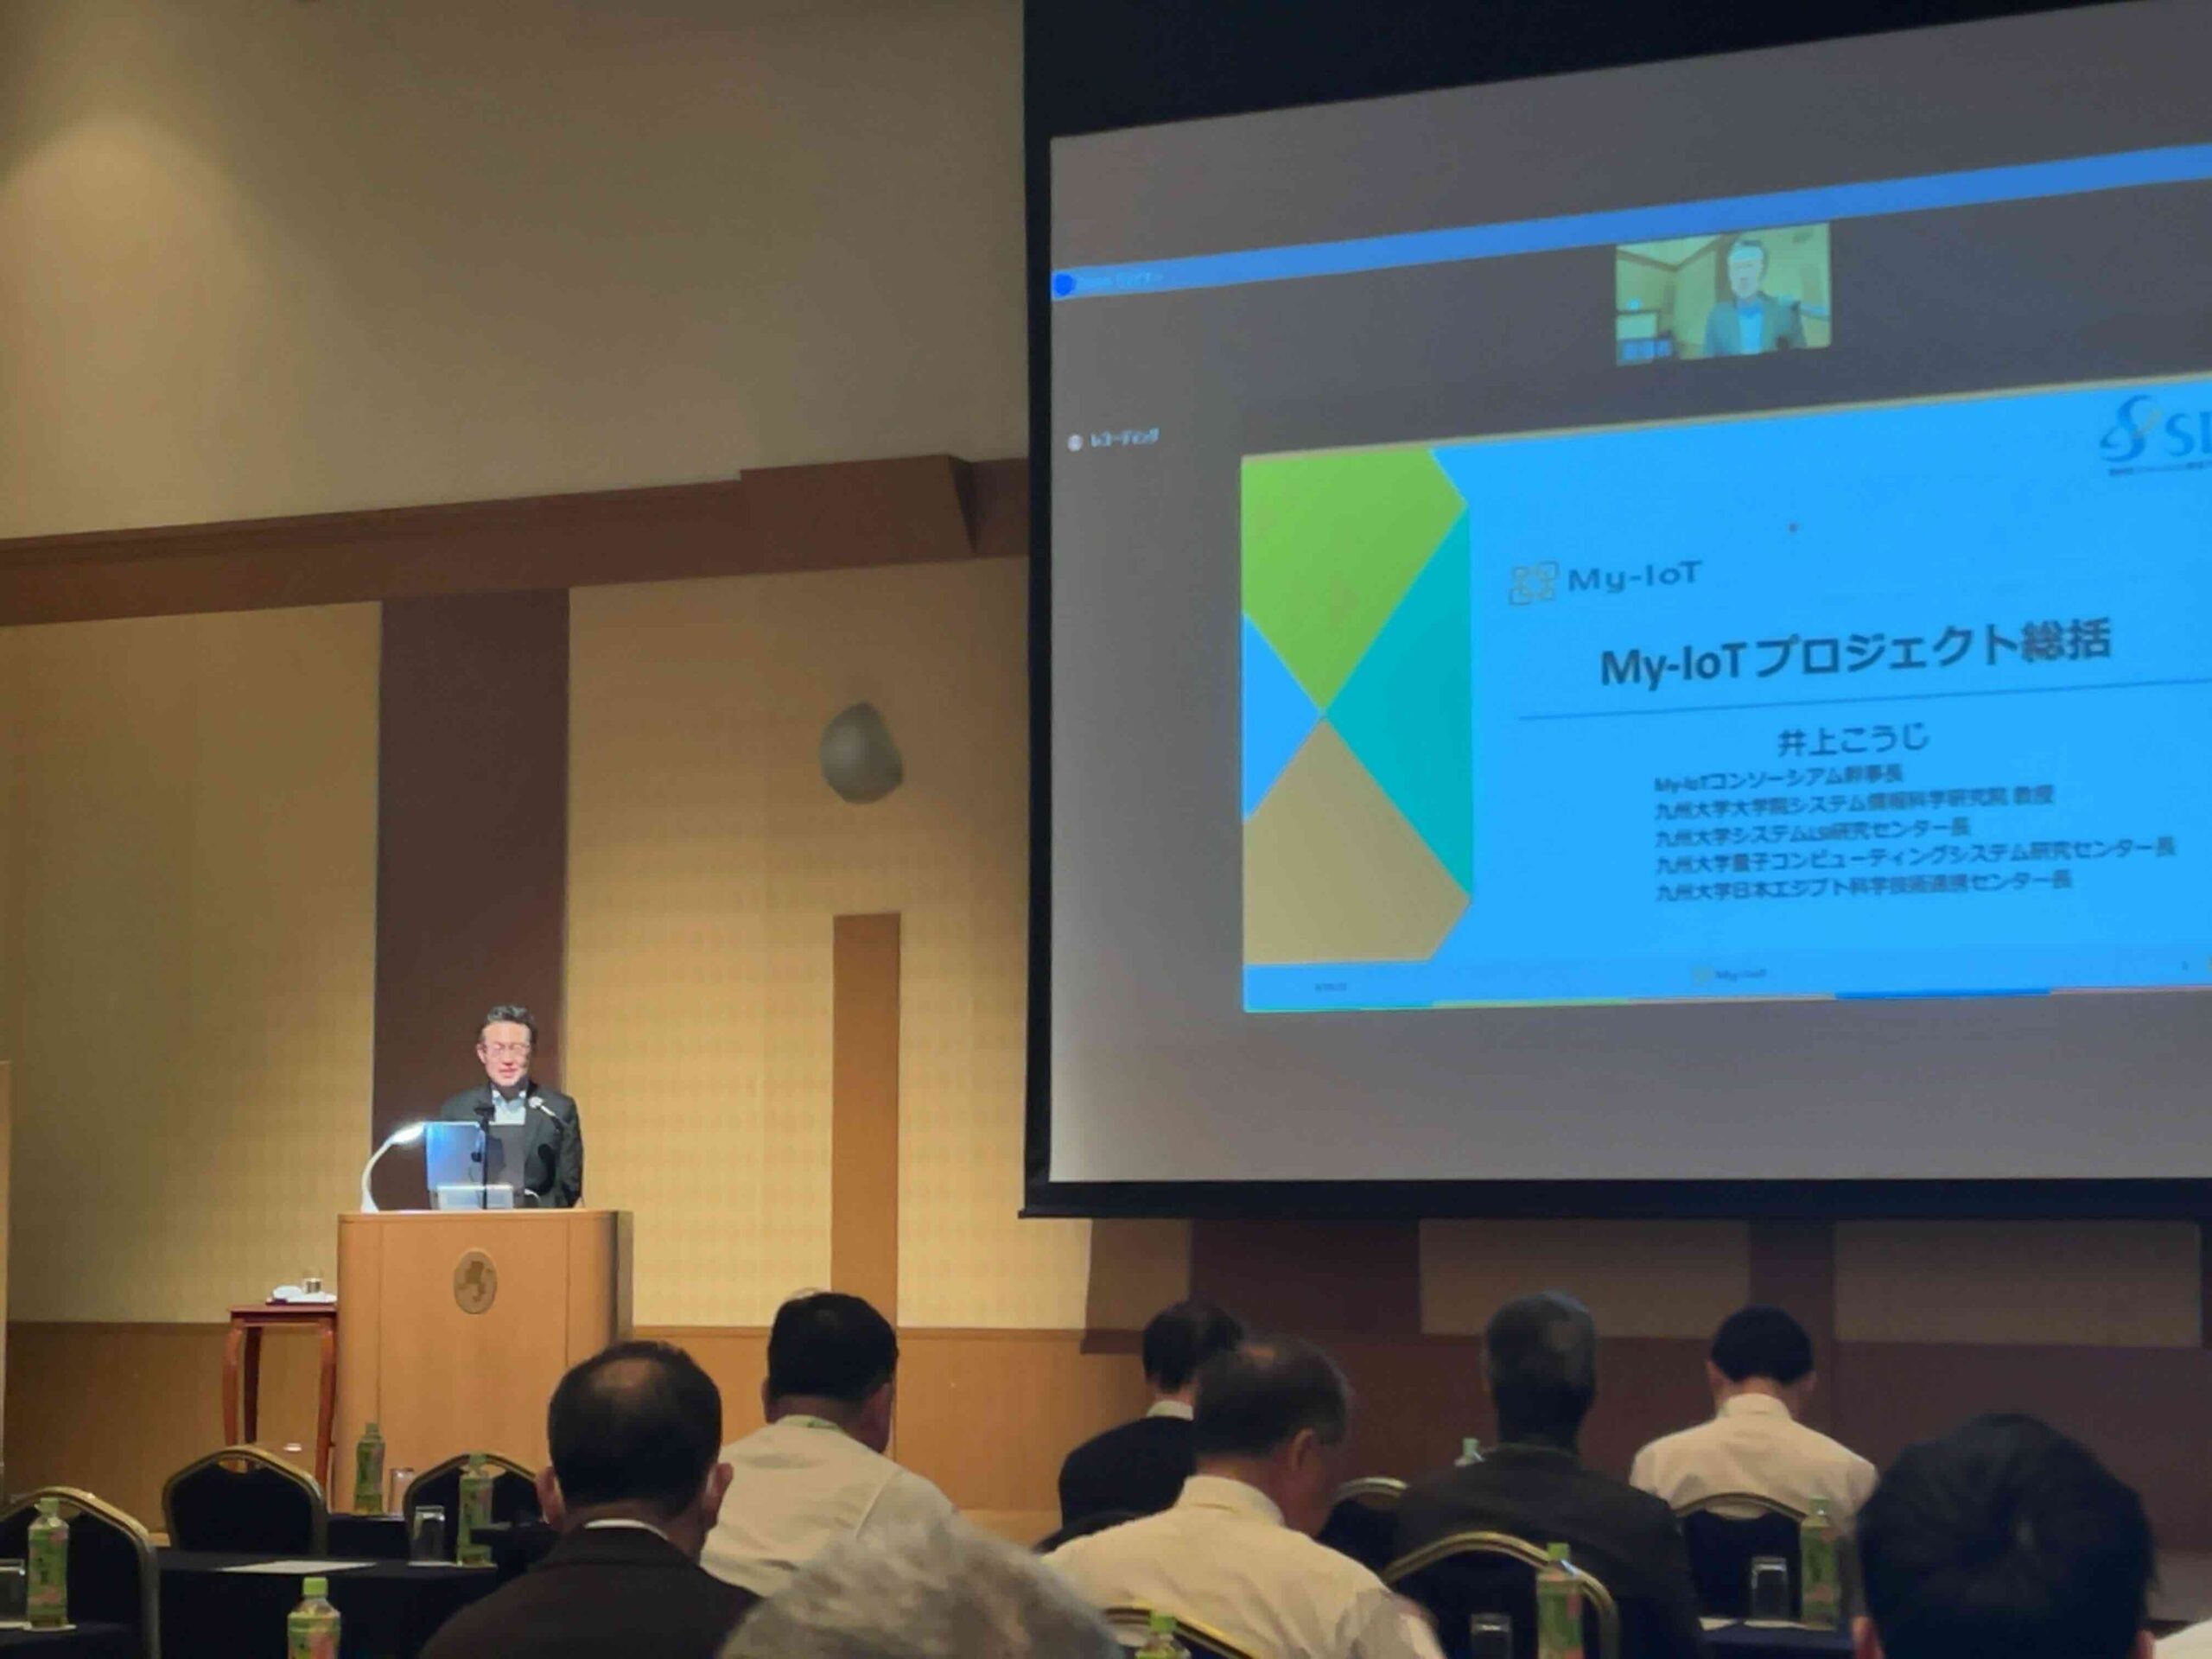 Koji gave a talk for IoT platform in the My-IoT symposium 2023.